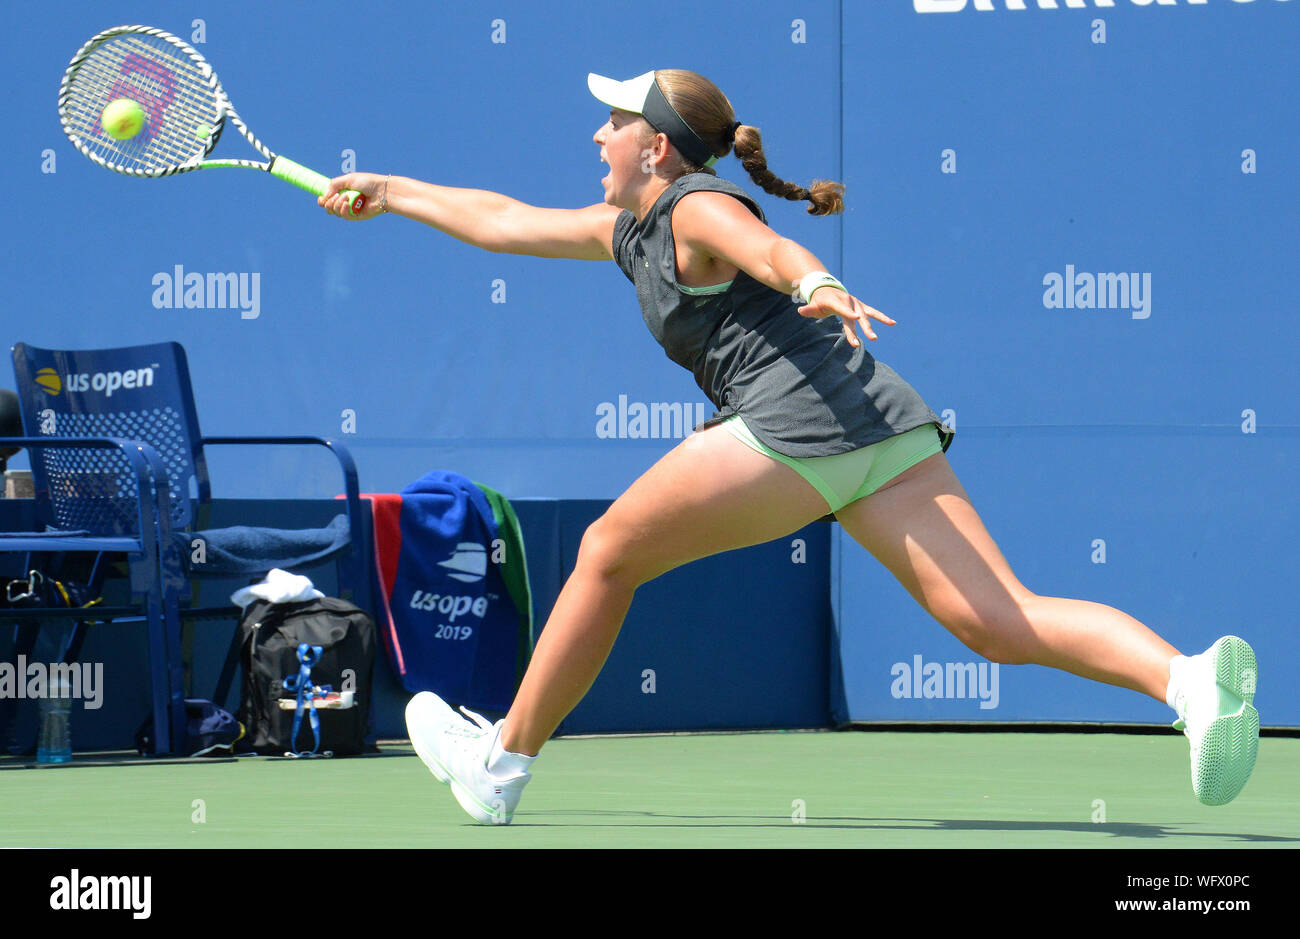 Jelena ostapenko hard court tennis hi-res stock photography and images -  Alamy